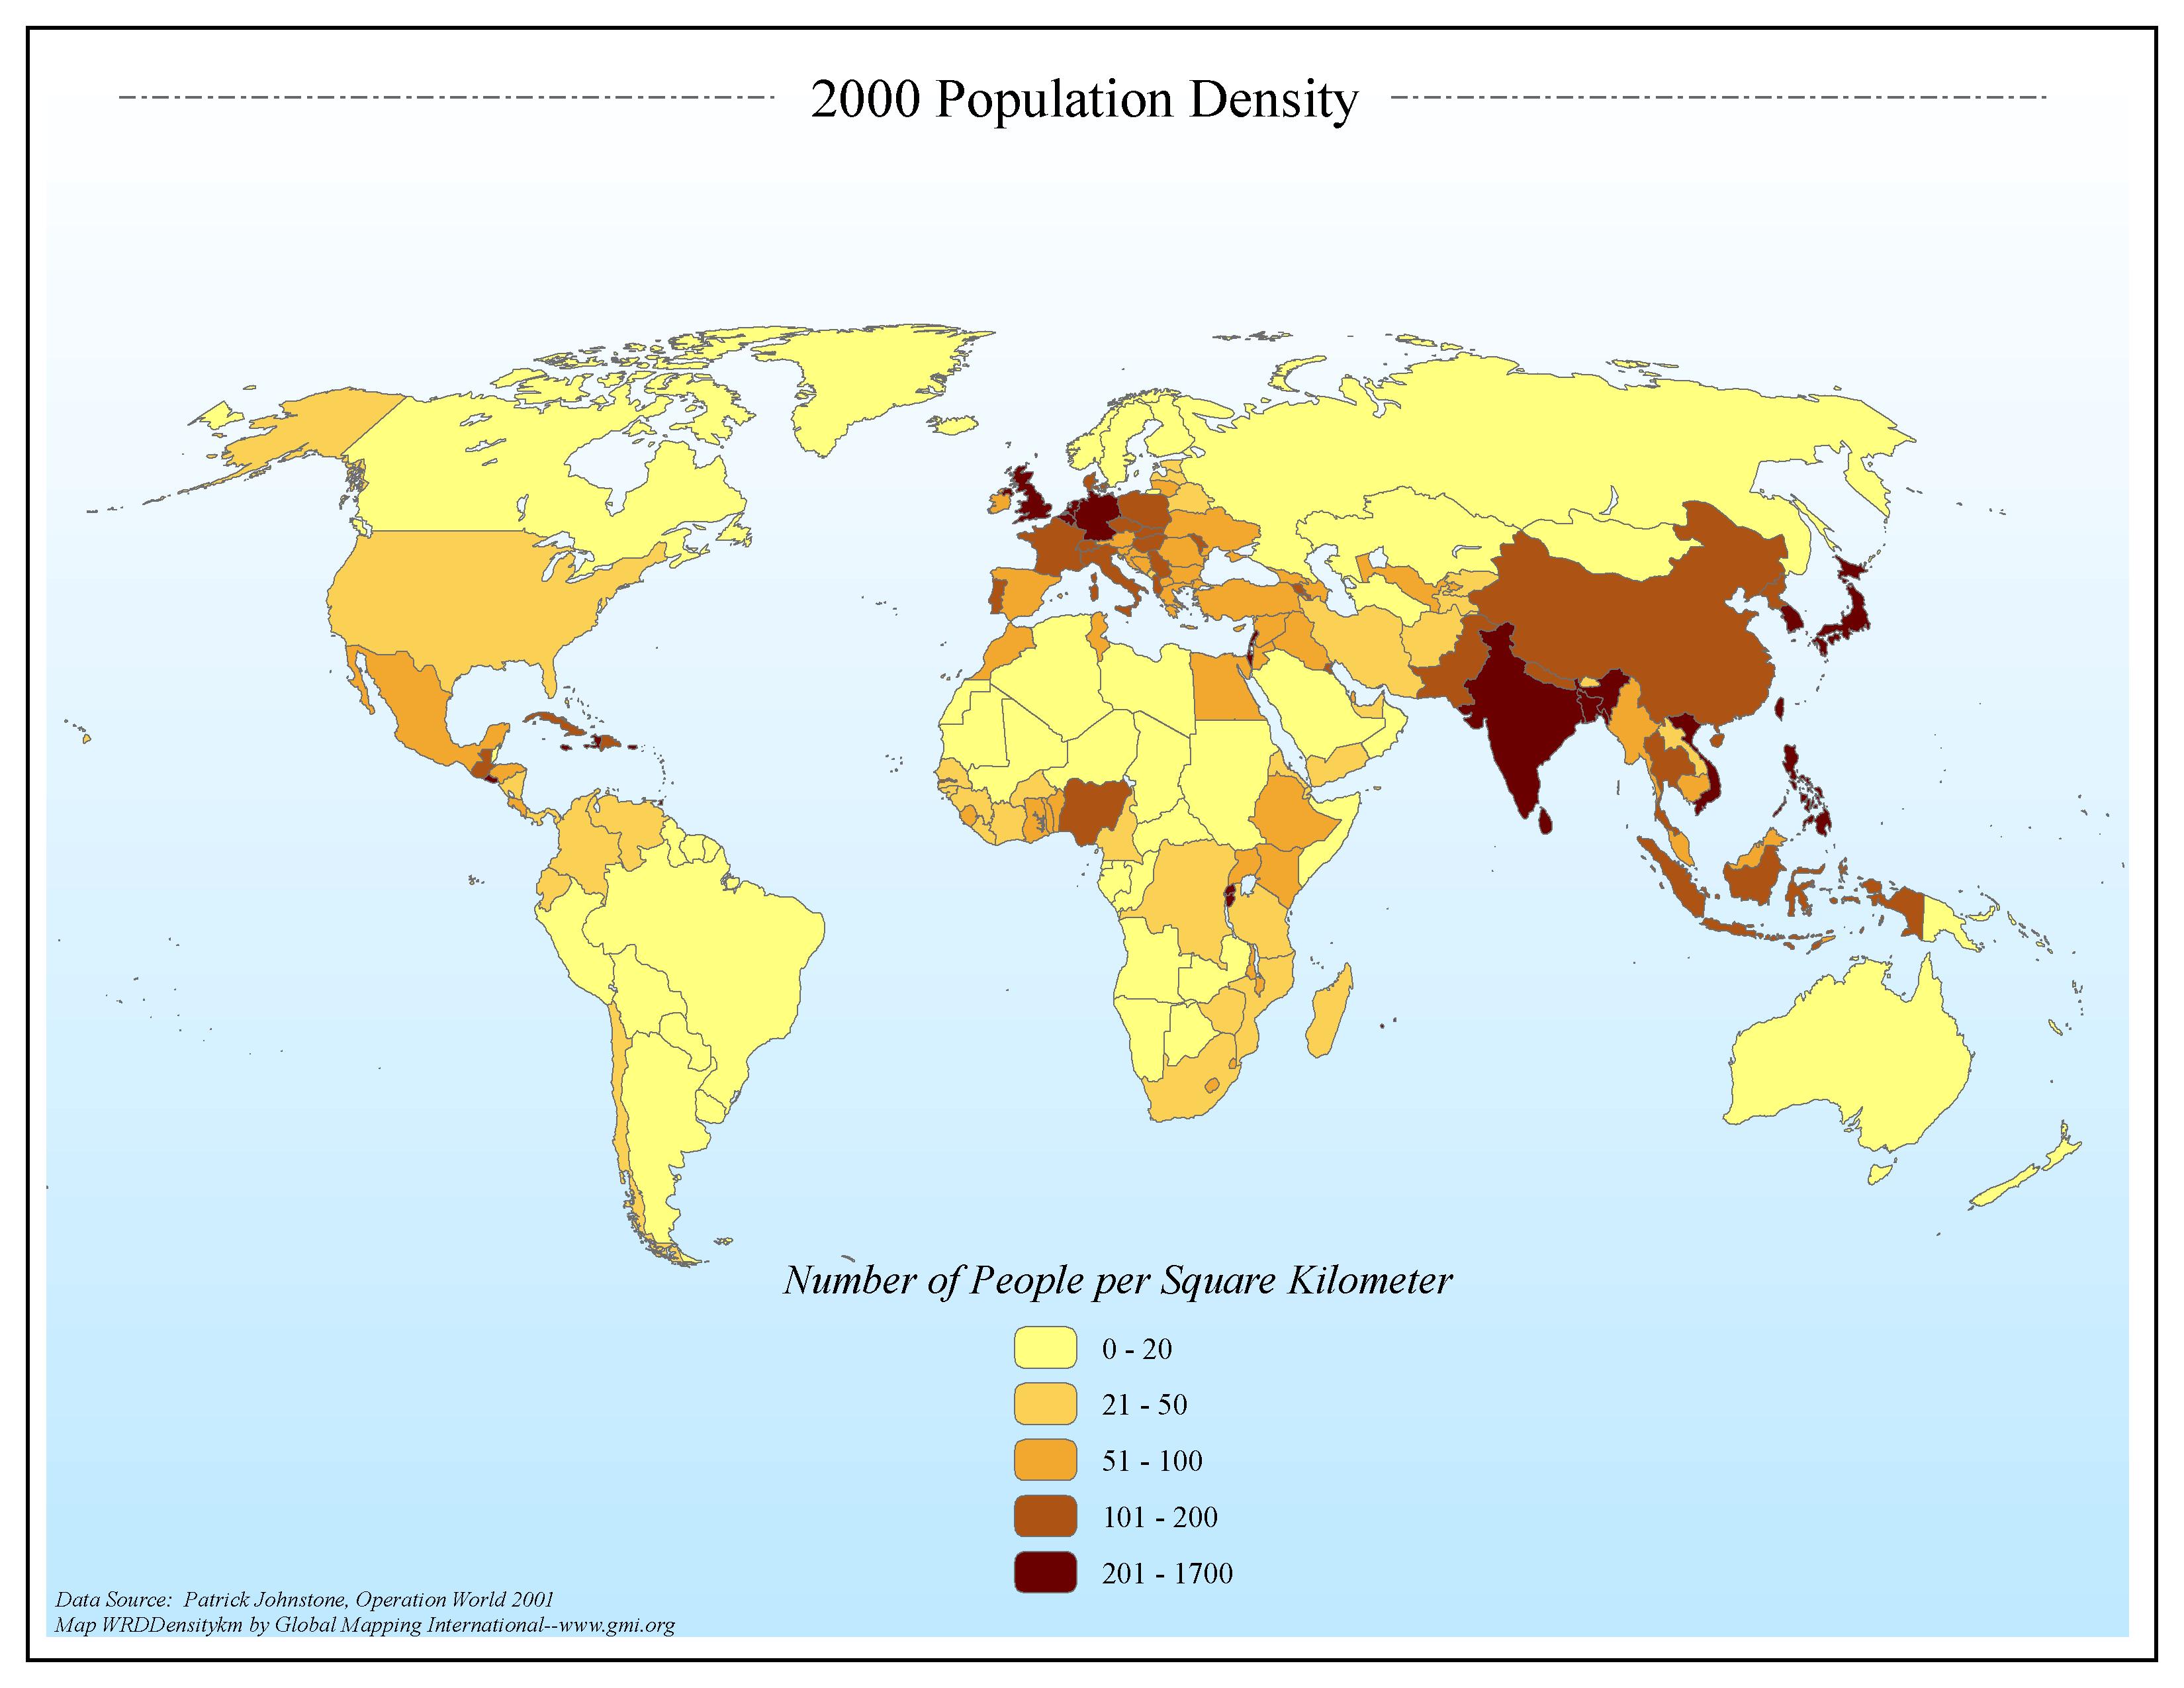 2000 Population Density per Square Kilometer